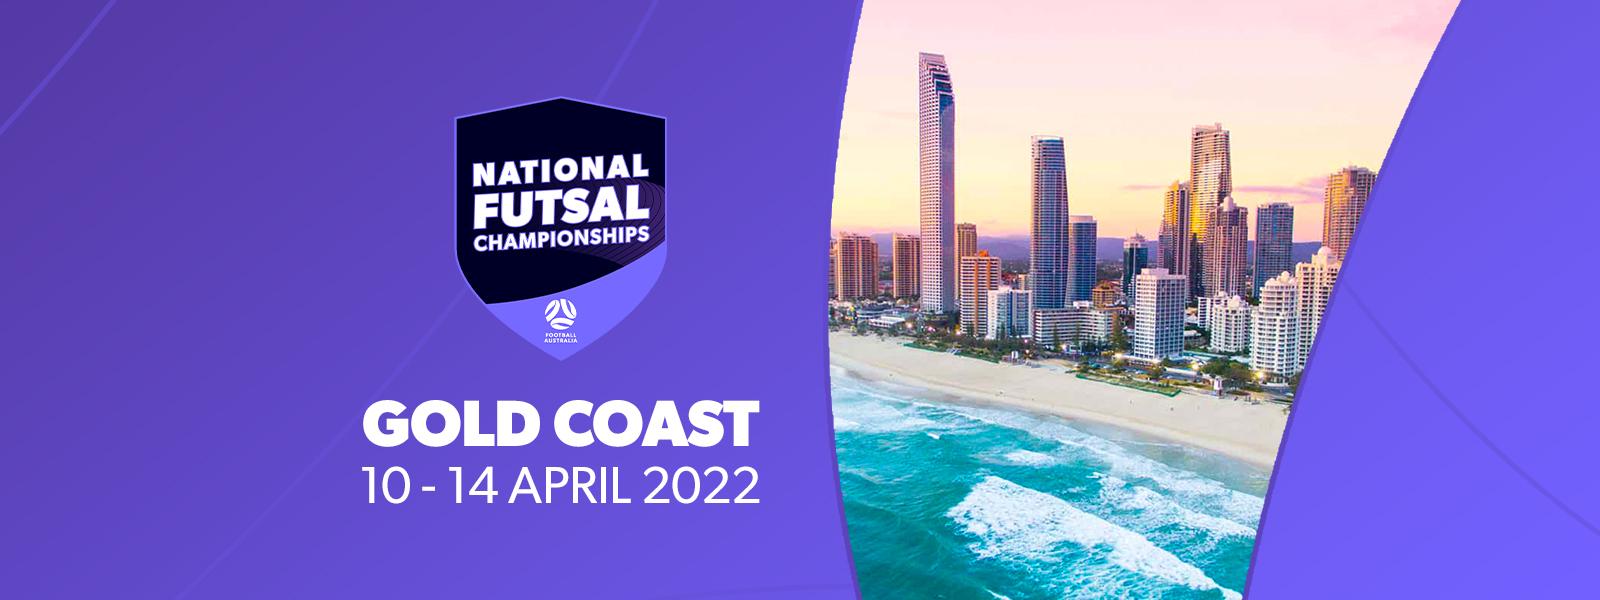 NFC 22 Gold Coast | 10-14 April